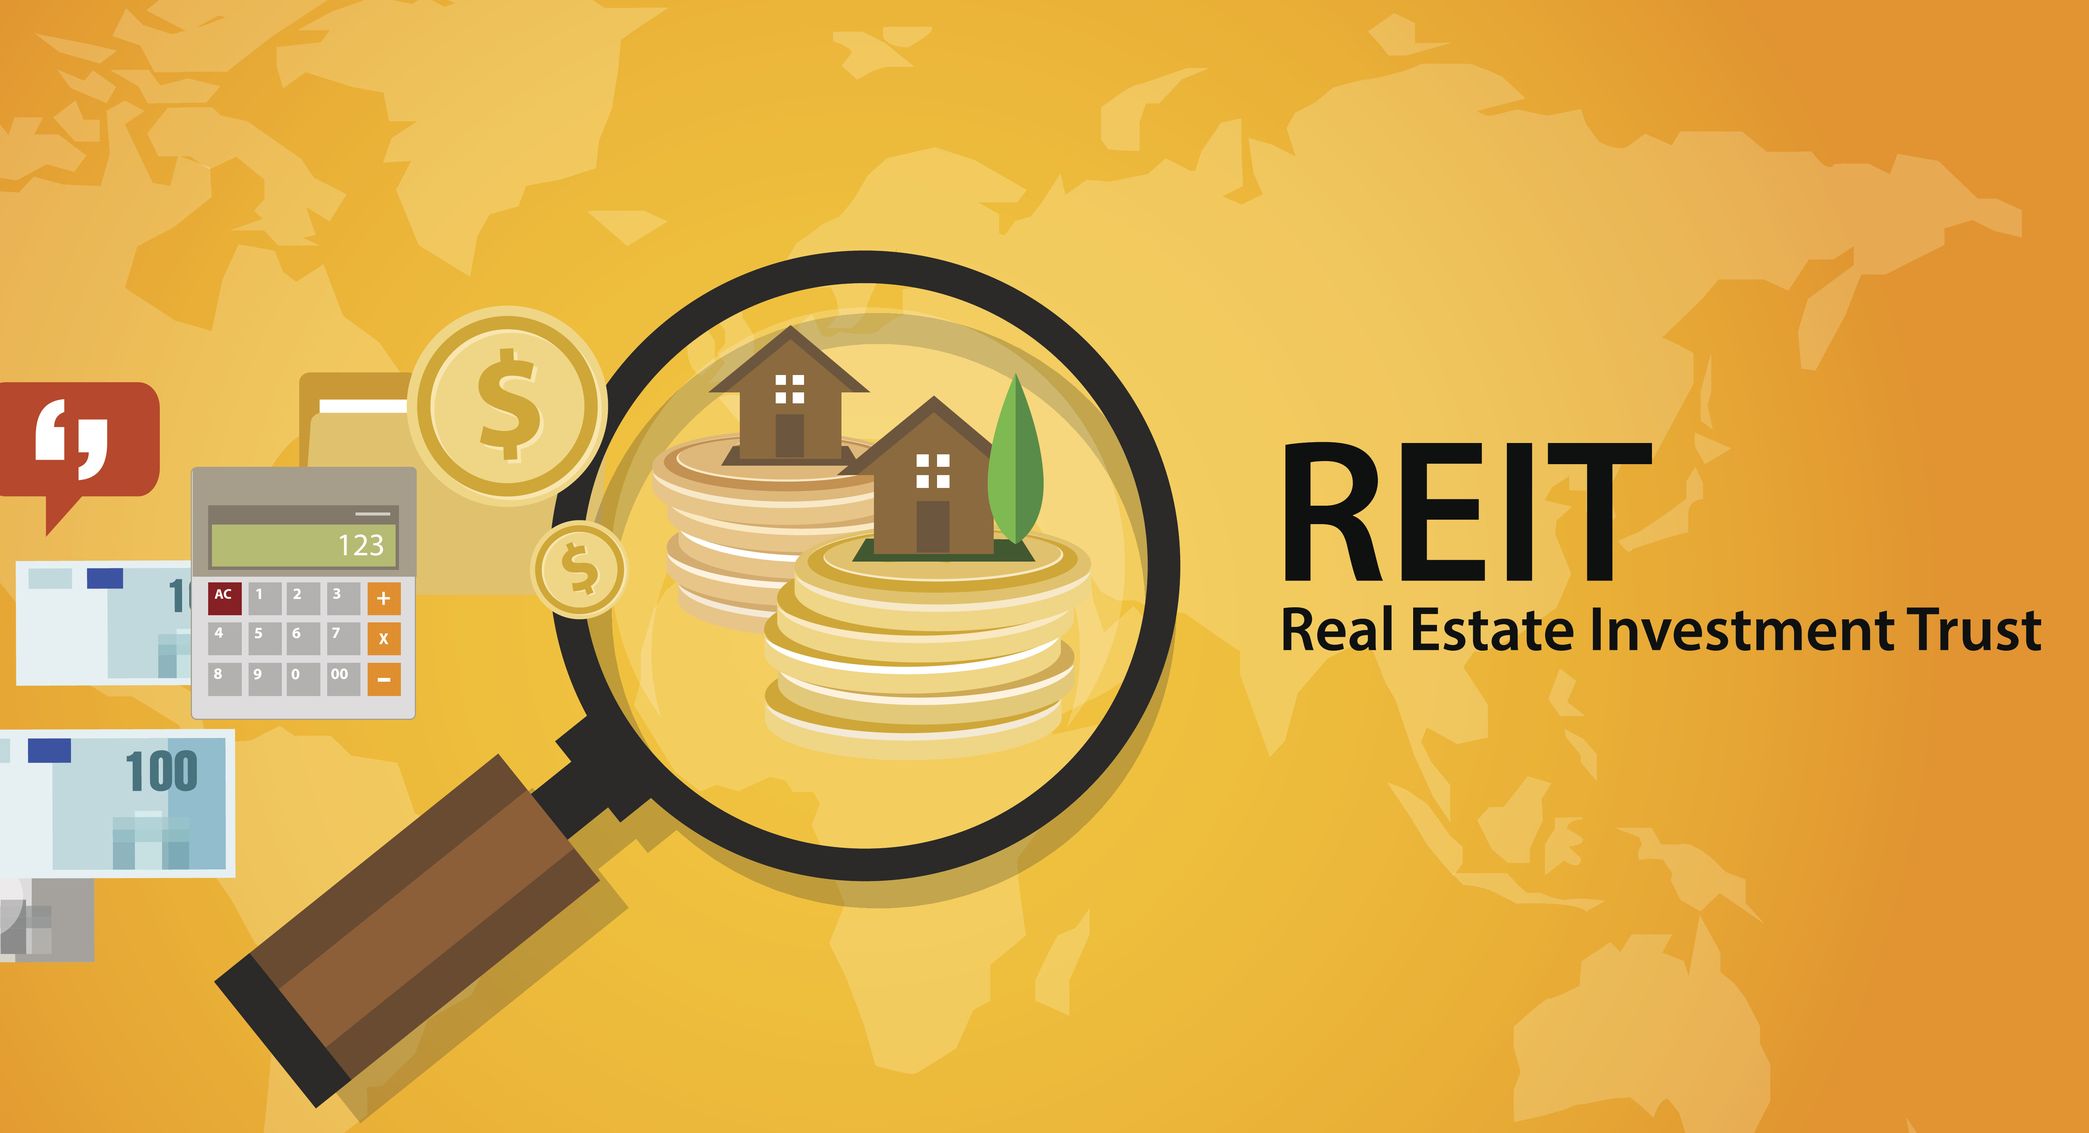 REIT Real Estate Investment Trust money for home finance transaction